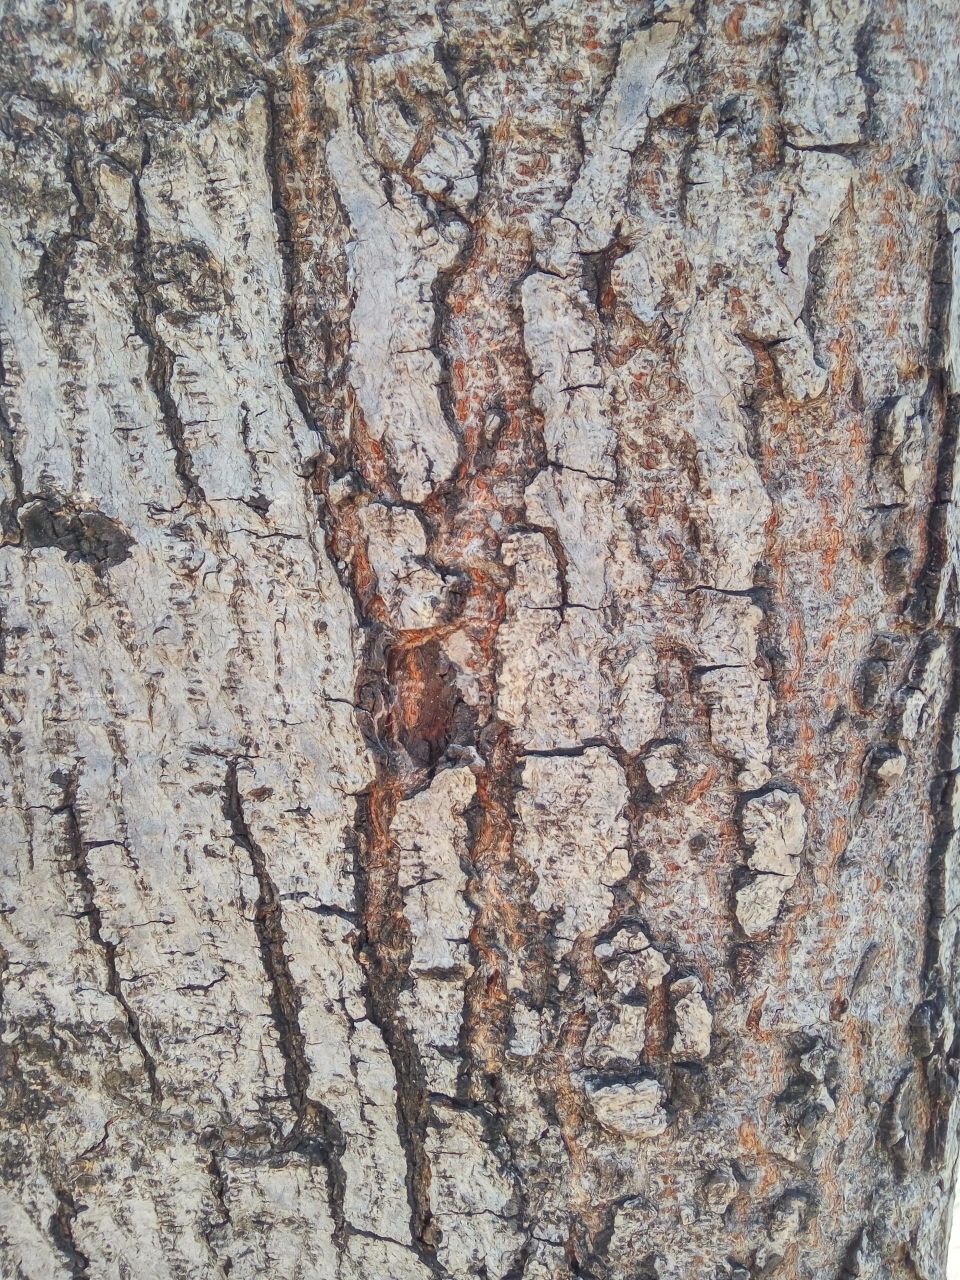 crack wood surface